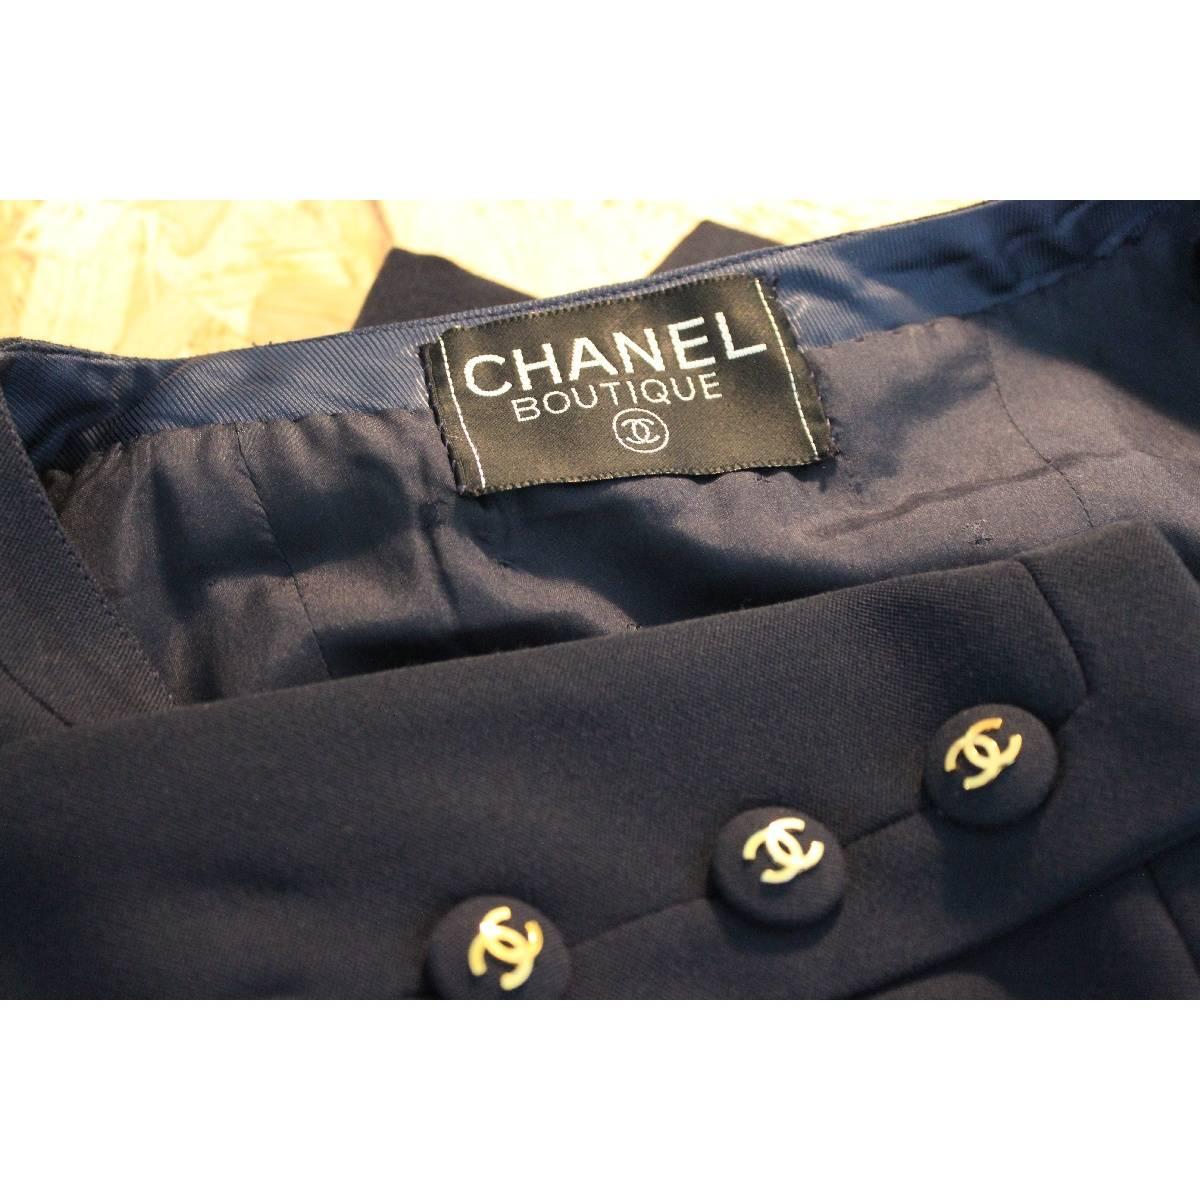 Chanel Boutique wool blue long dress women’s size 44 it vintage 1980s 1